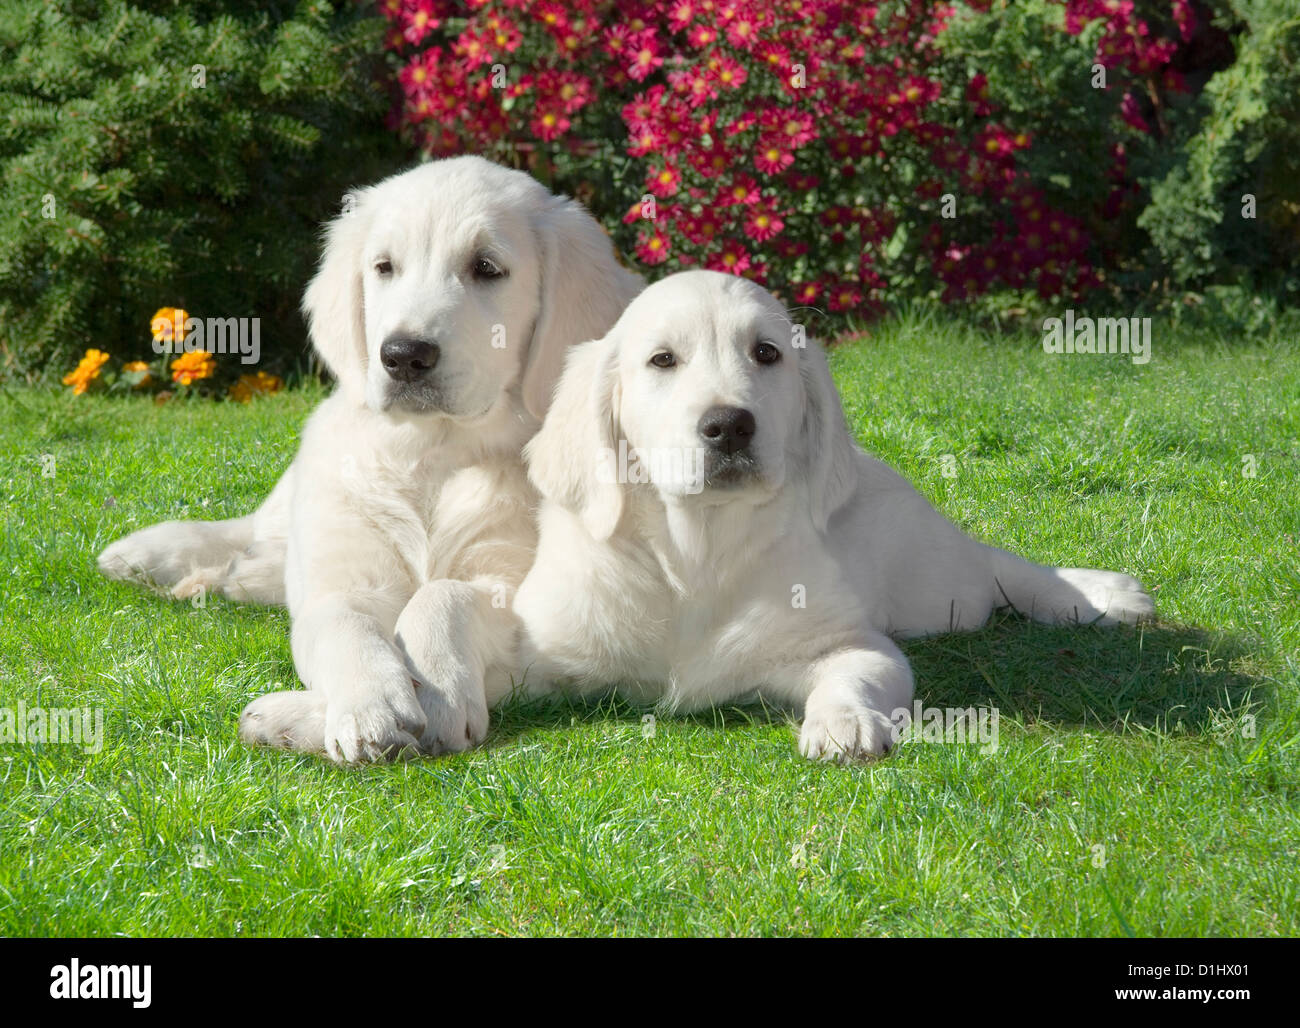 Two Golden Retriever dogs in the garden Stock Photo